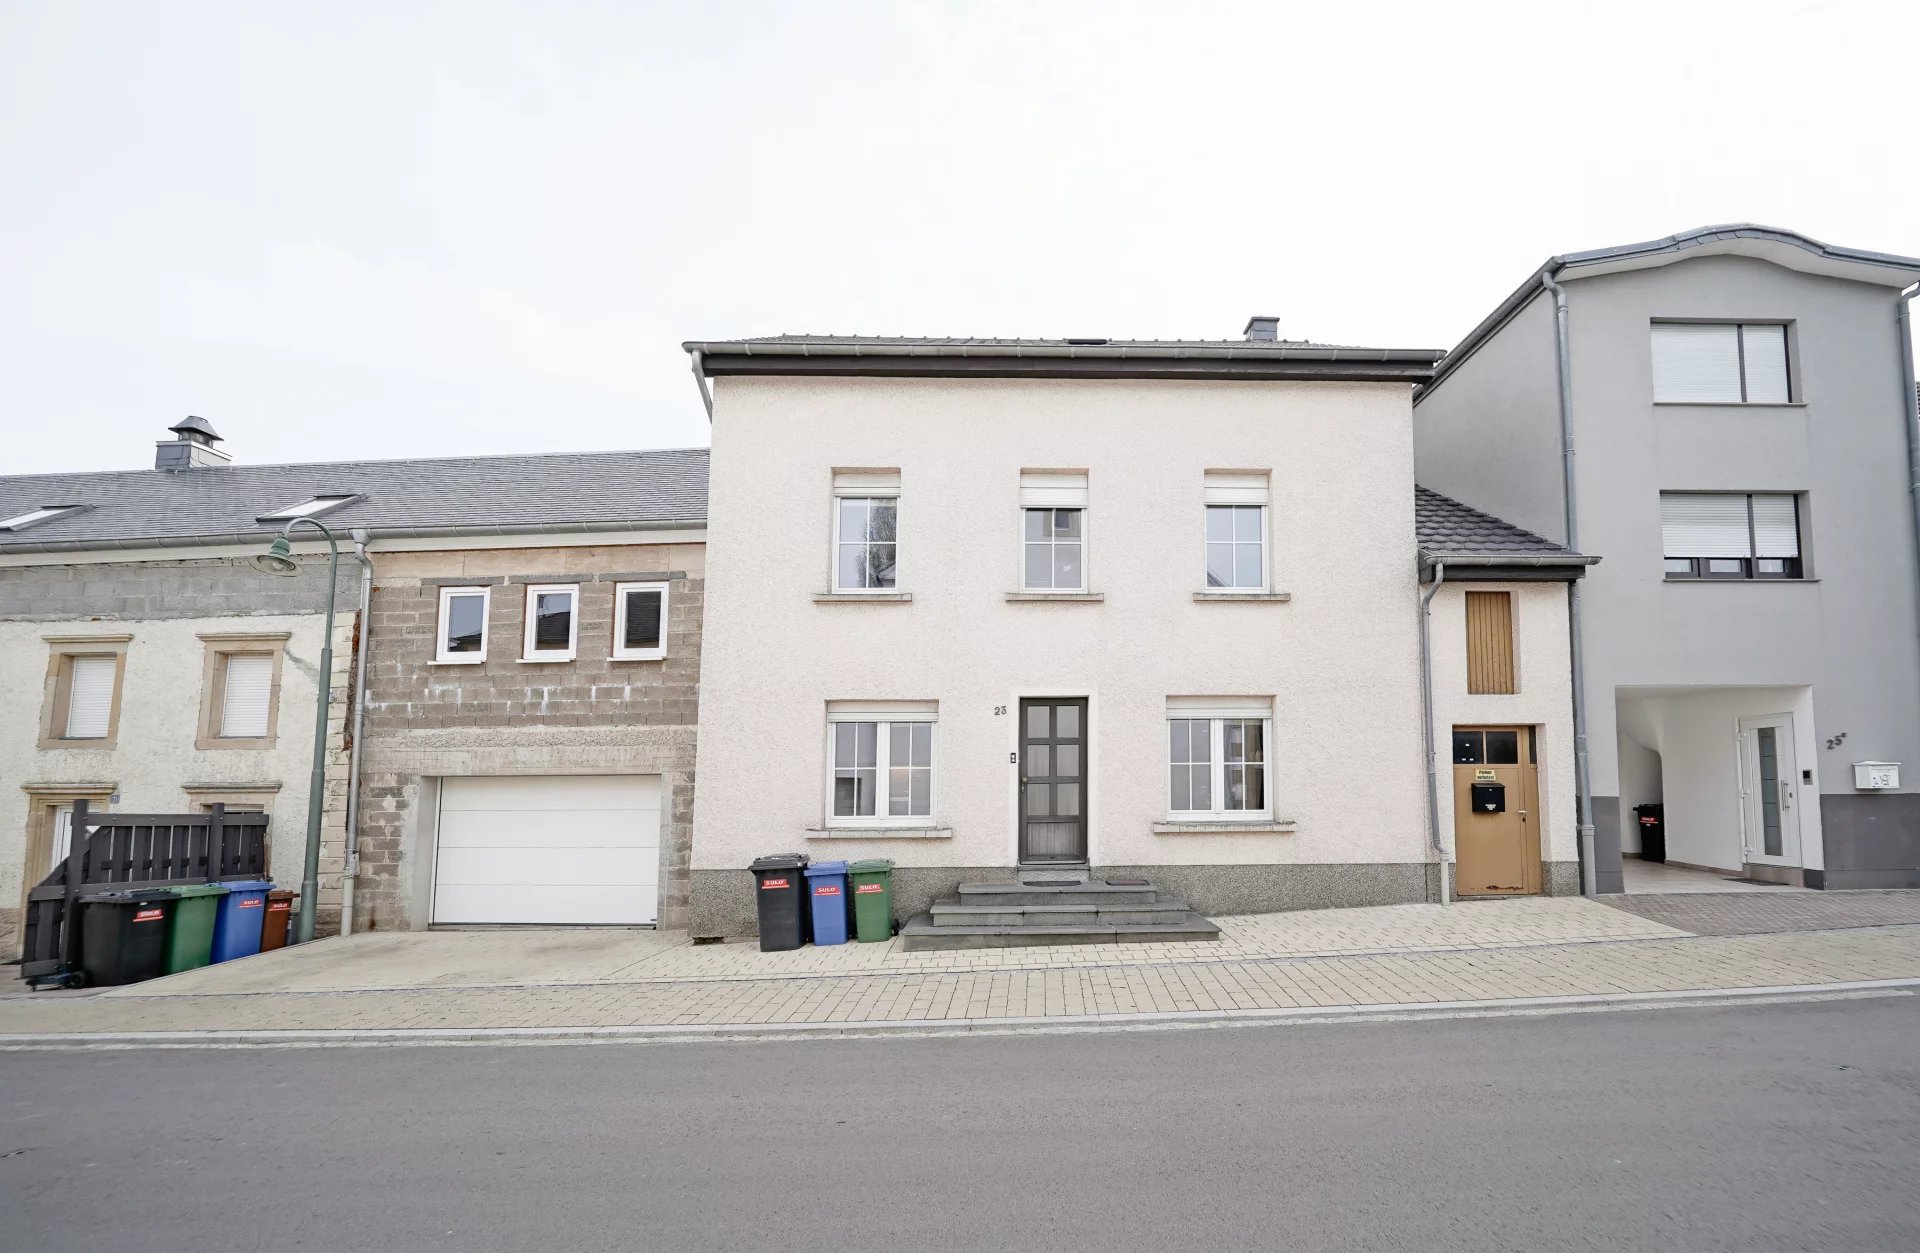 Sale House Consdorf